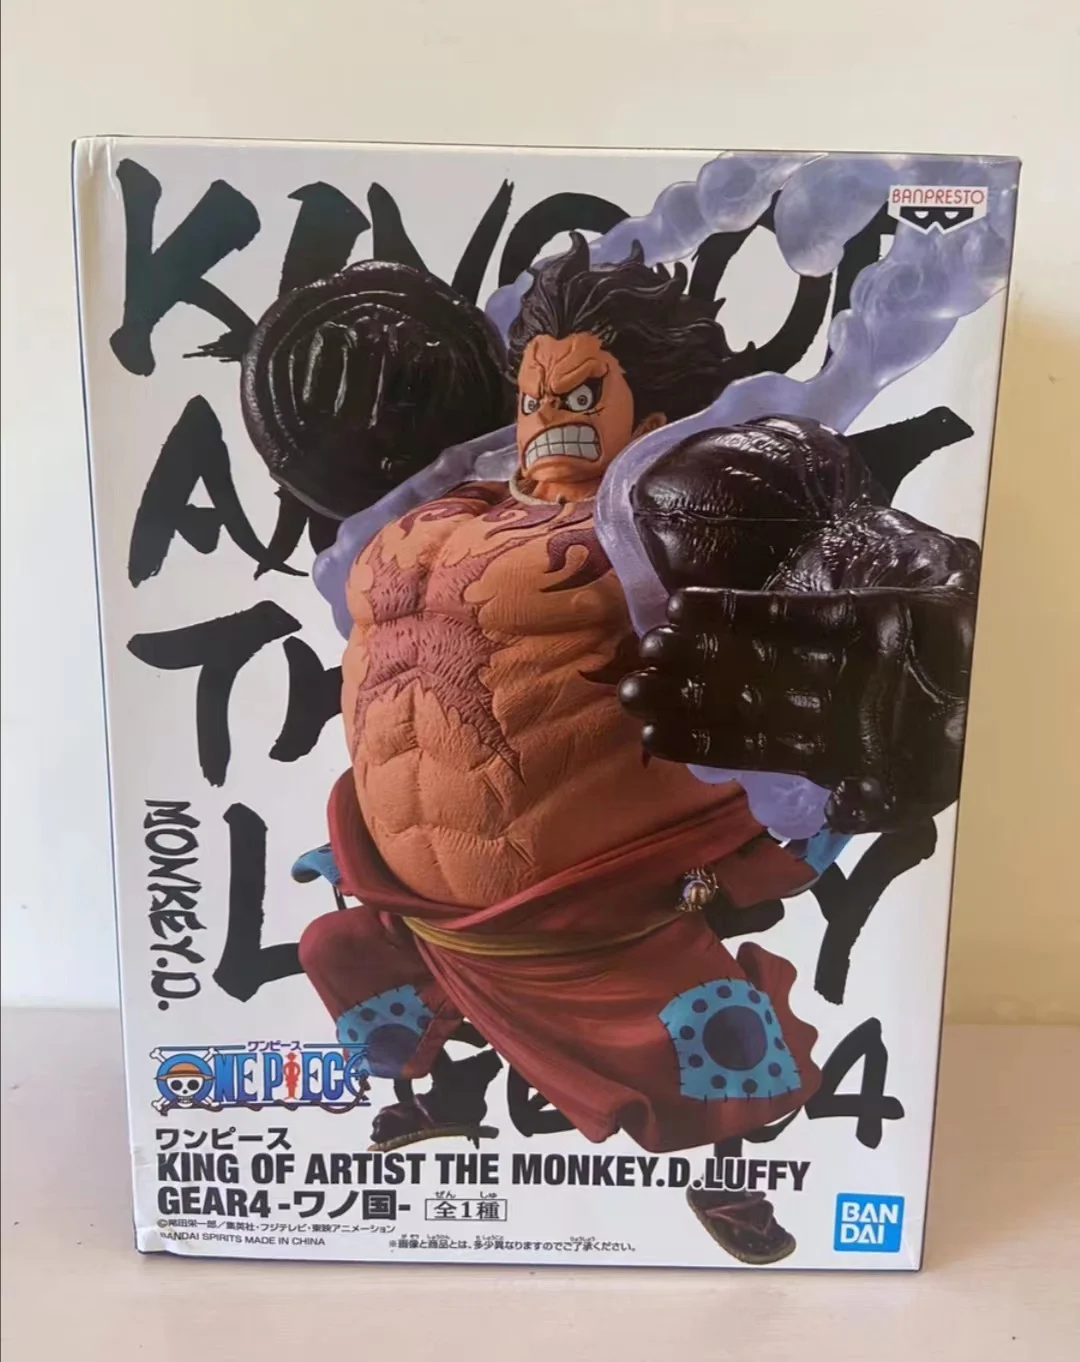 In Stock 100% Original Banpresto KOA Monkey.D.Luffy Gear 4 Wano Kuji Anime PVC Action Figure Boxed Model Collection Model Toys